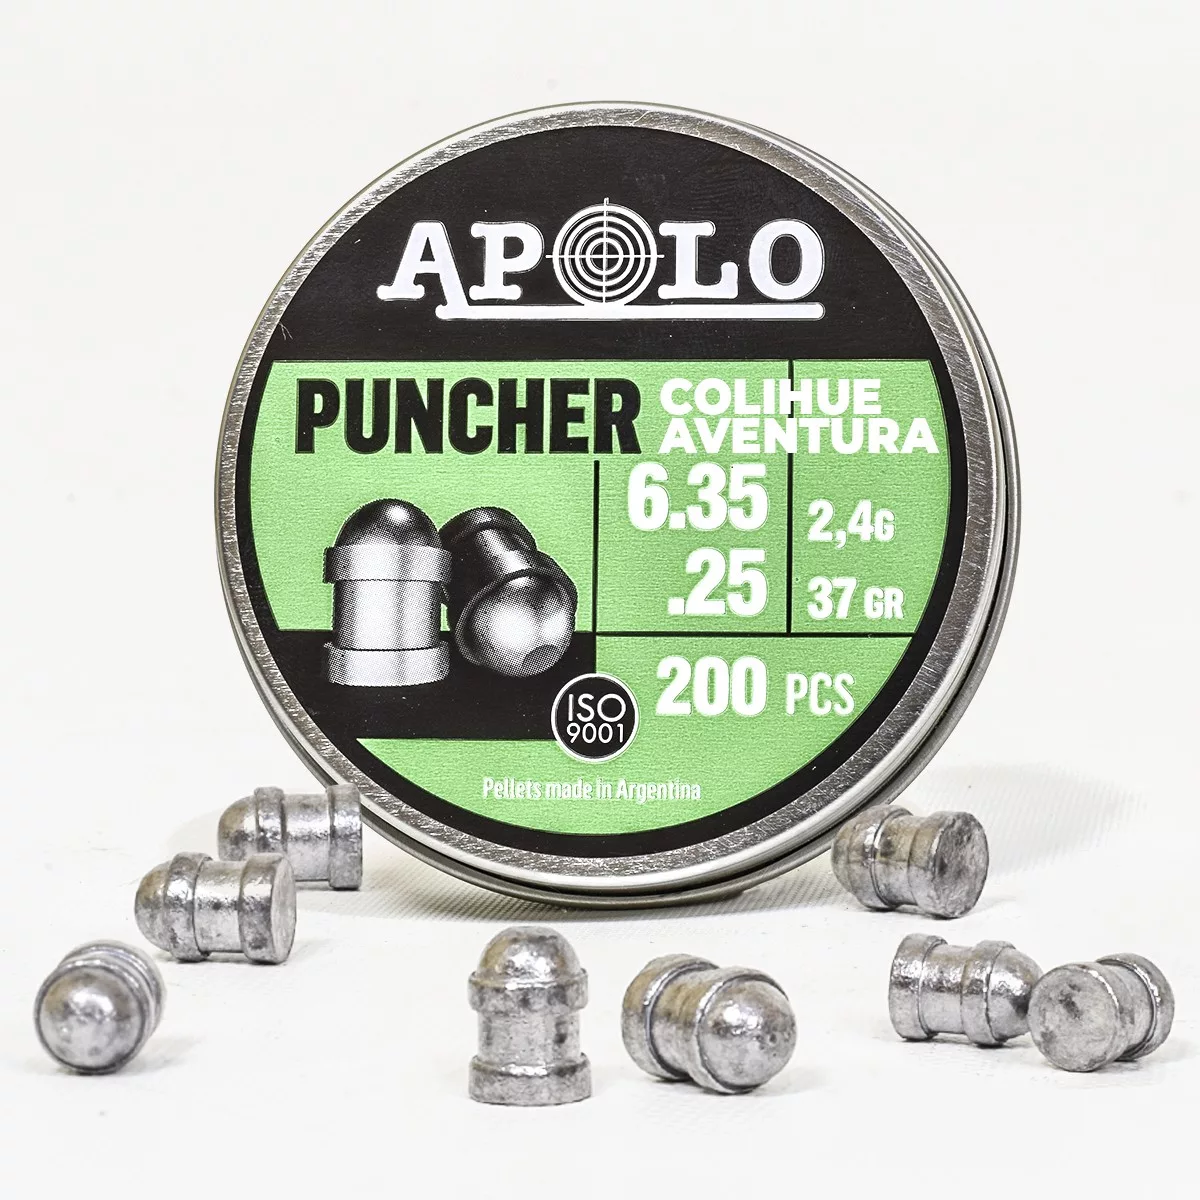 Balines / Puntas Apolo Puncher cal 6.35mm - 37 grains - Colihue Aventura